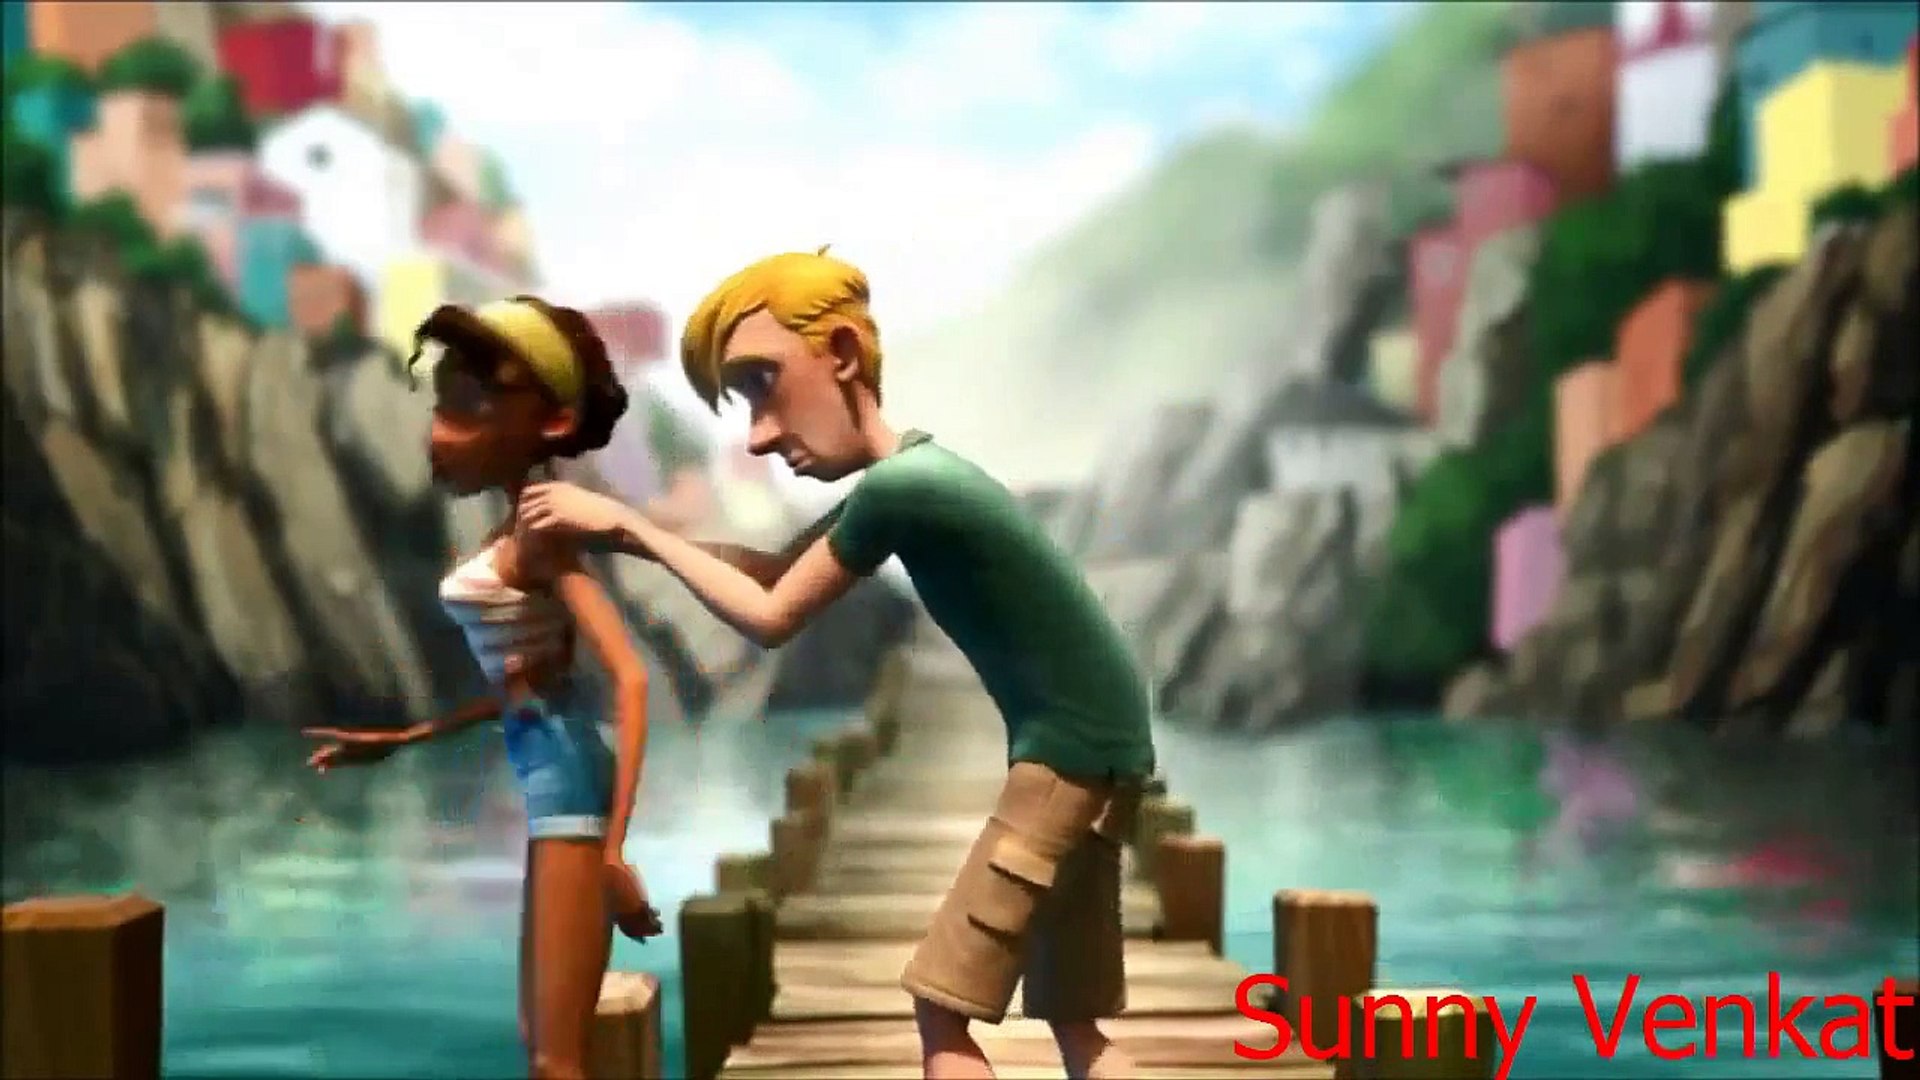 Very Hot Animation Love Story 2015|Cartoon for Kids Love Story New Animation  Short Film - Dailymotion Video